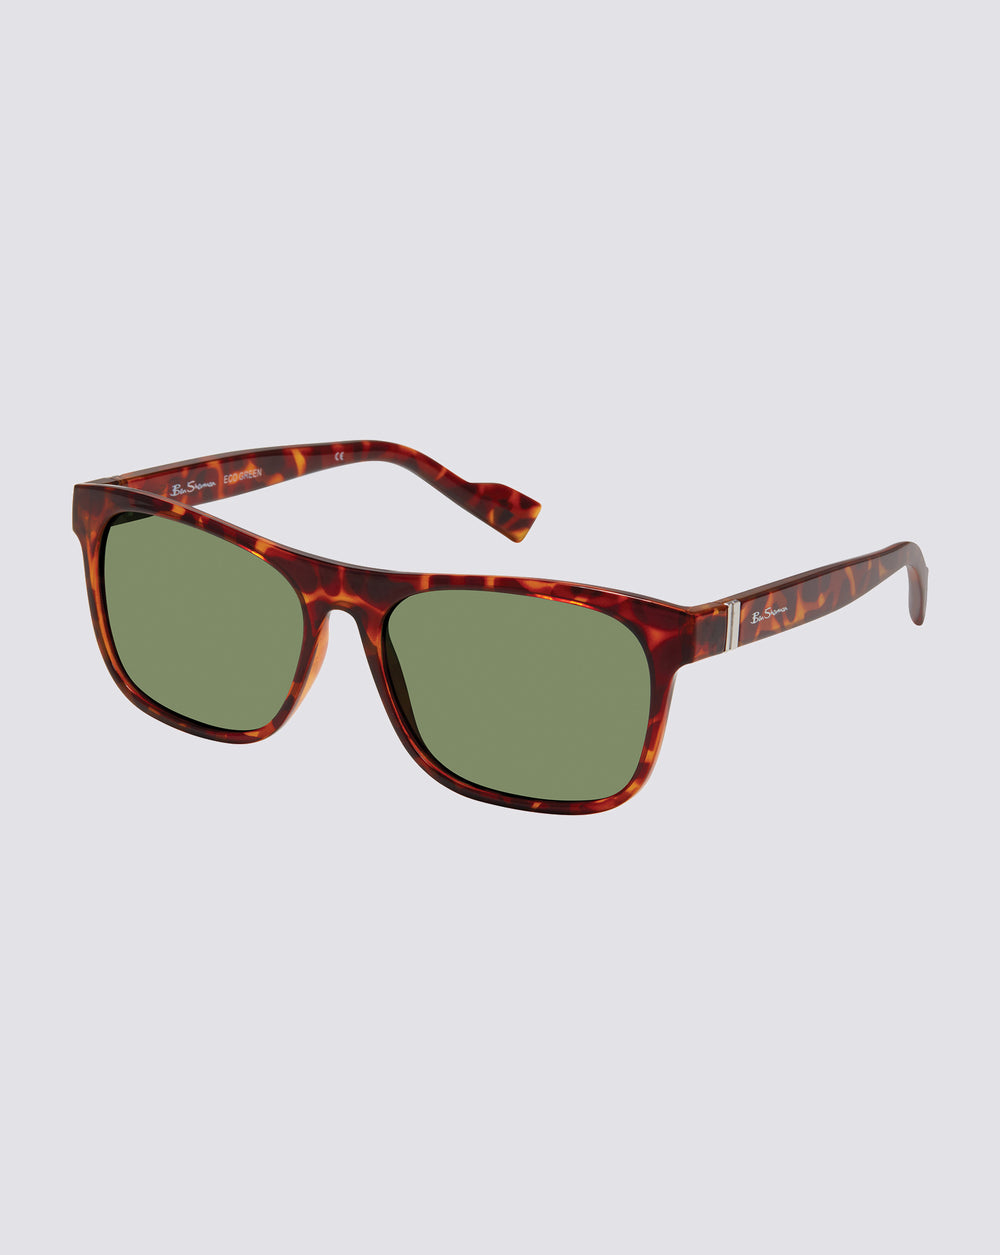 Harry Polarized Eco-Green Sunglasses - Tortoise